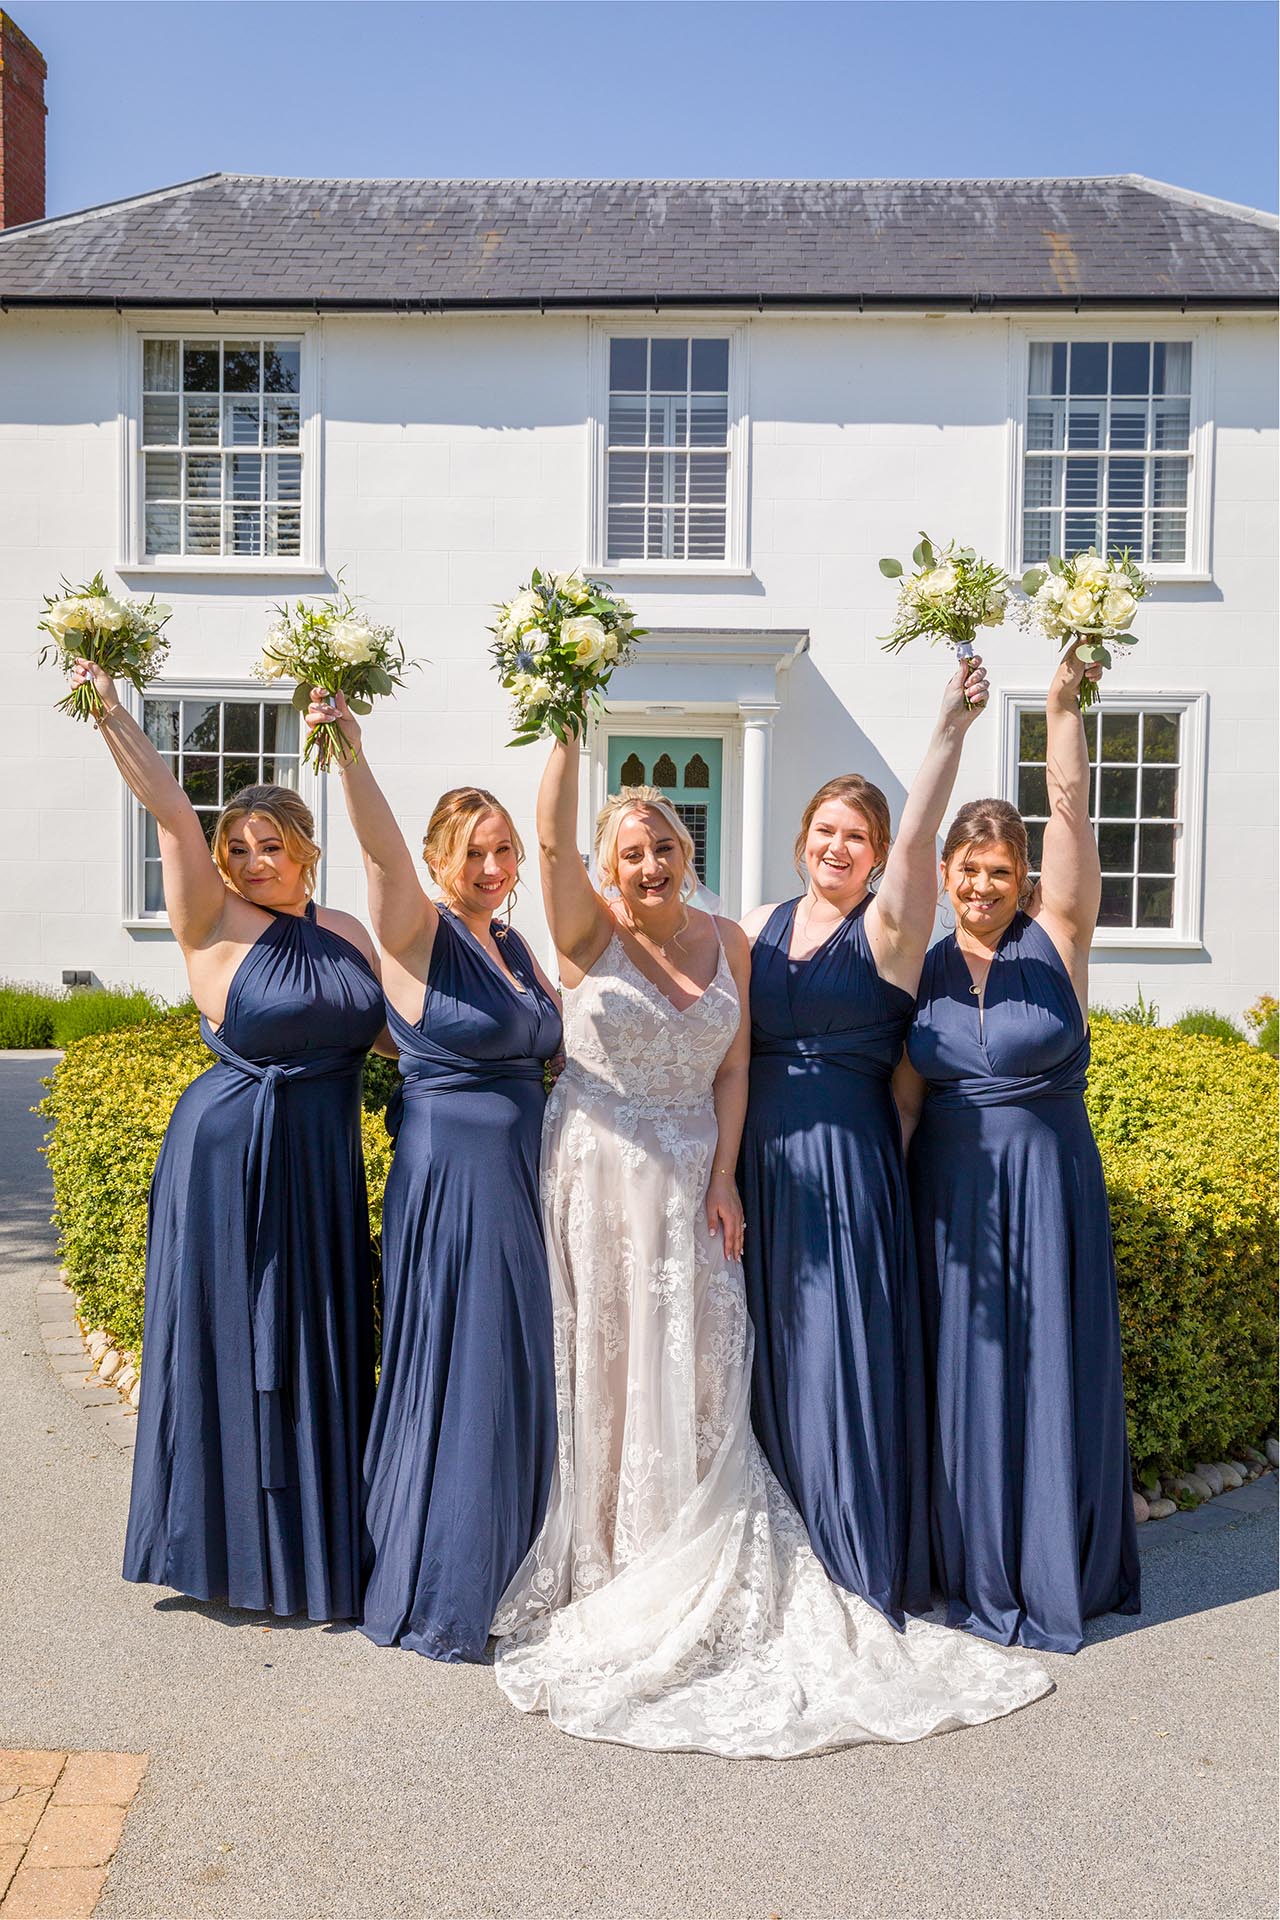 Bride and bridesmaids celebrating by Essex wedding photographer at Vaulty Manor Maldon